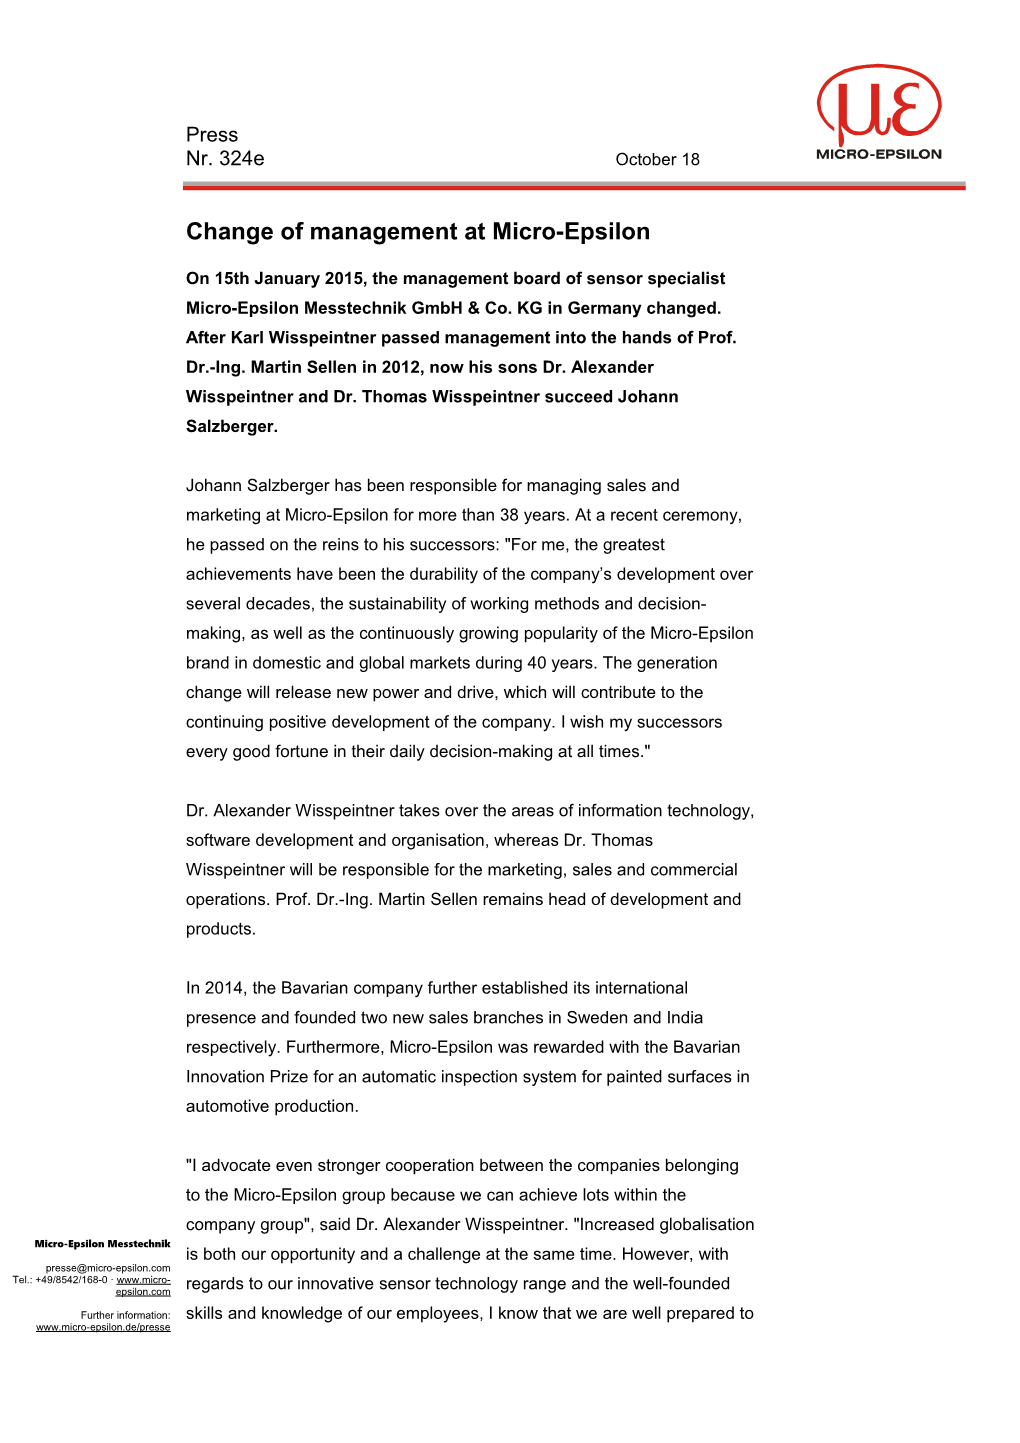 Change of Management at Micro-Epsilon